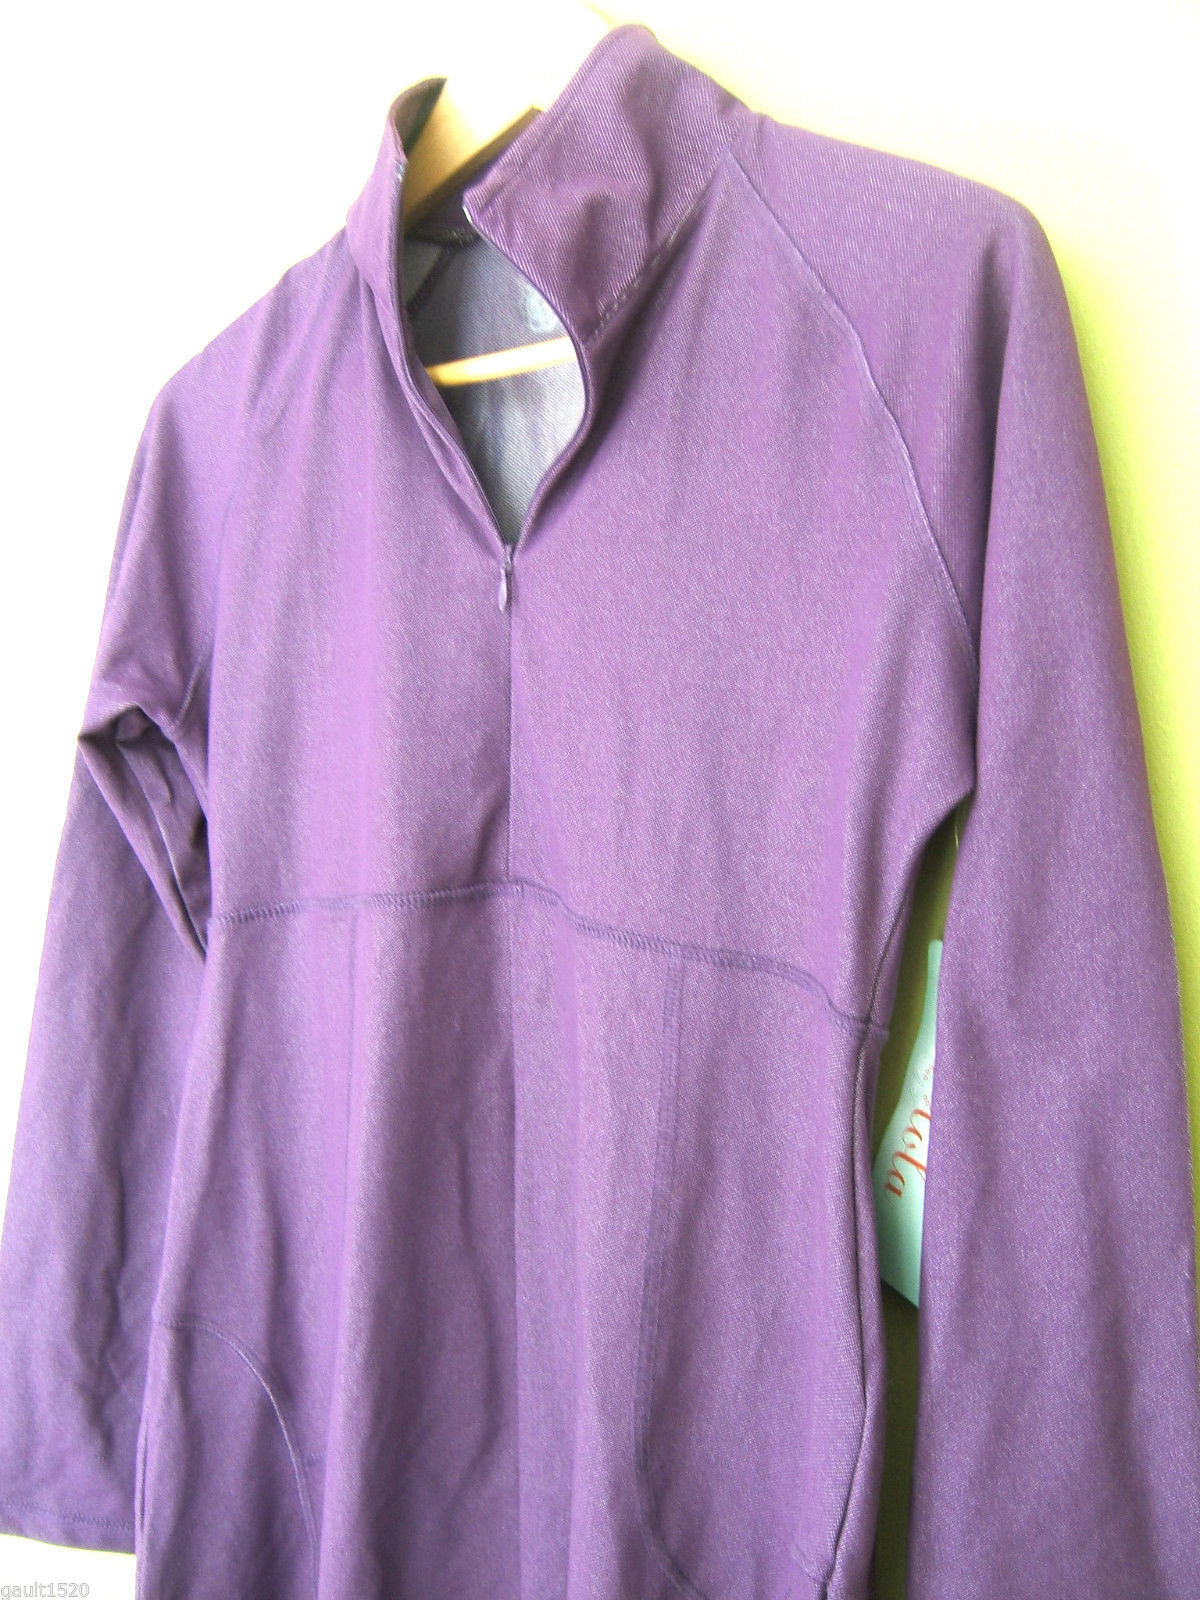 NWT Lola Gorgeous Yoga Athletic Stretch Tunic Top Purple Zip Long Jacket L $138 - $78.00